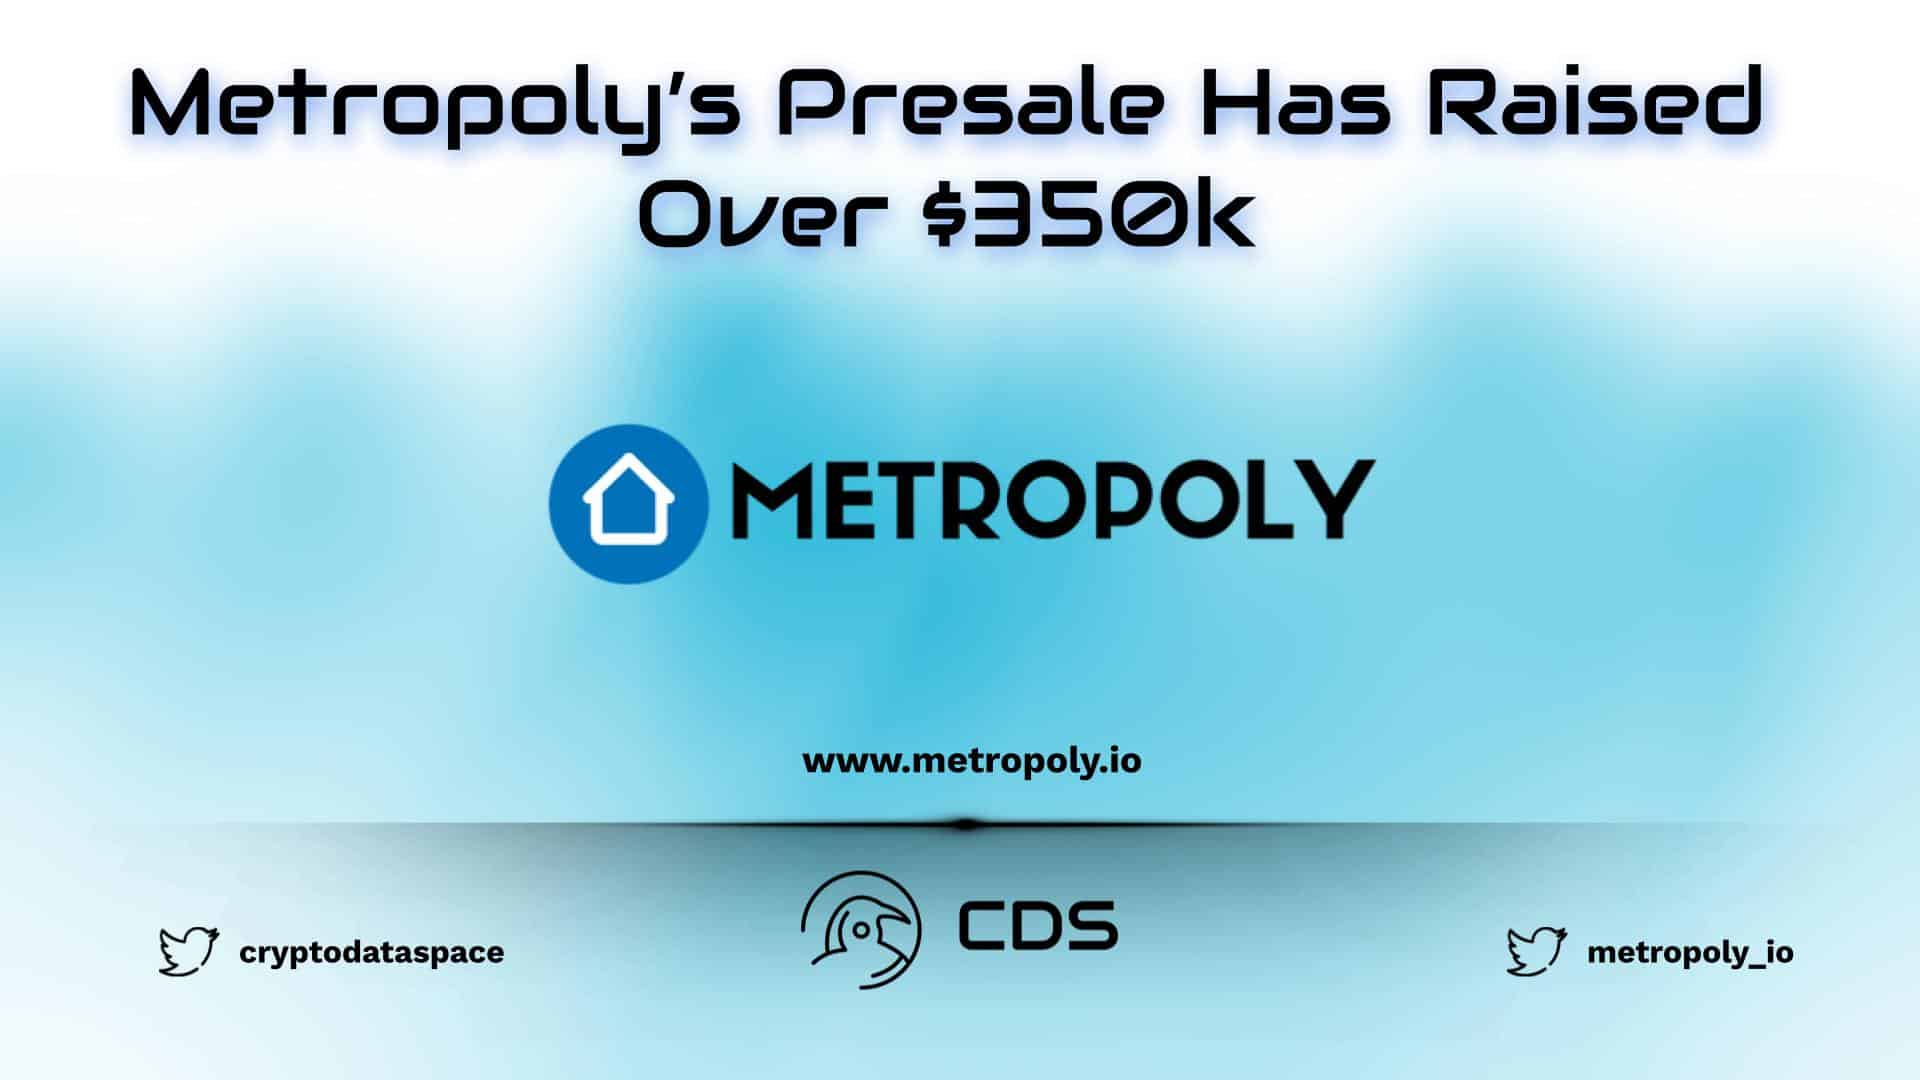 Metropoly’s Presale Has Raised Over $350k